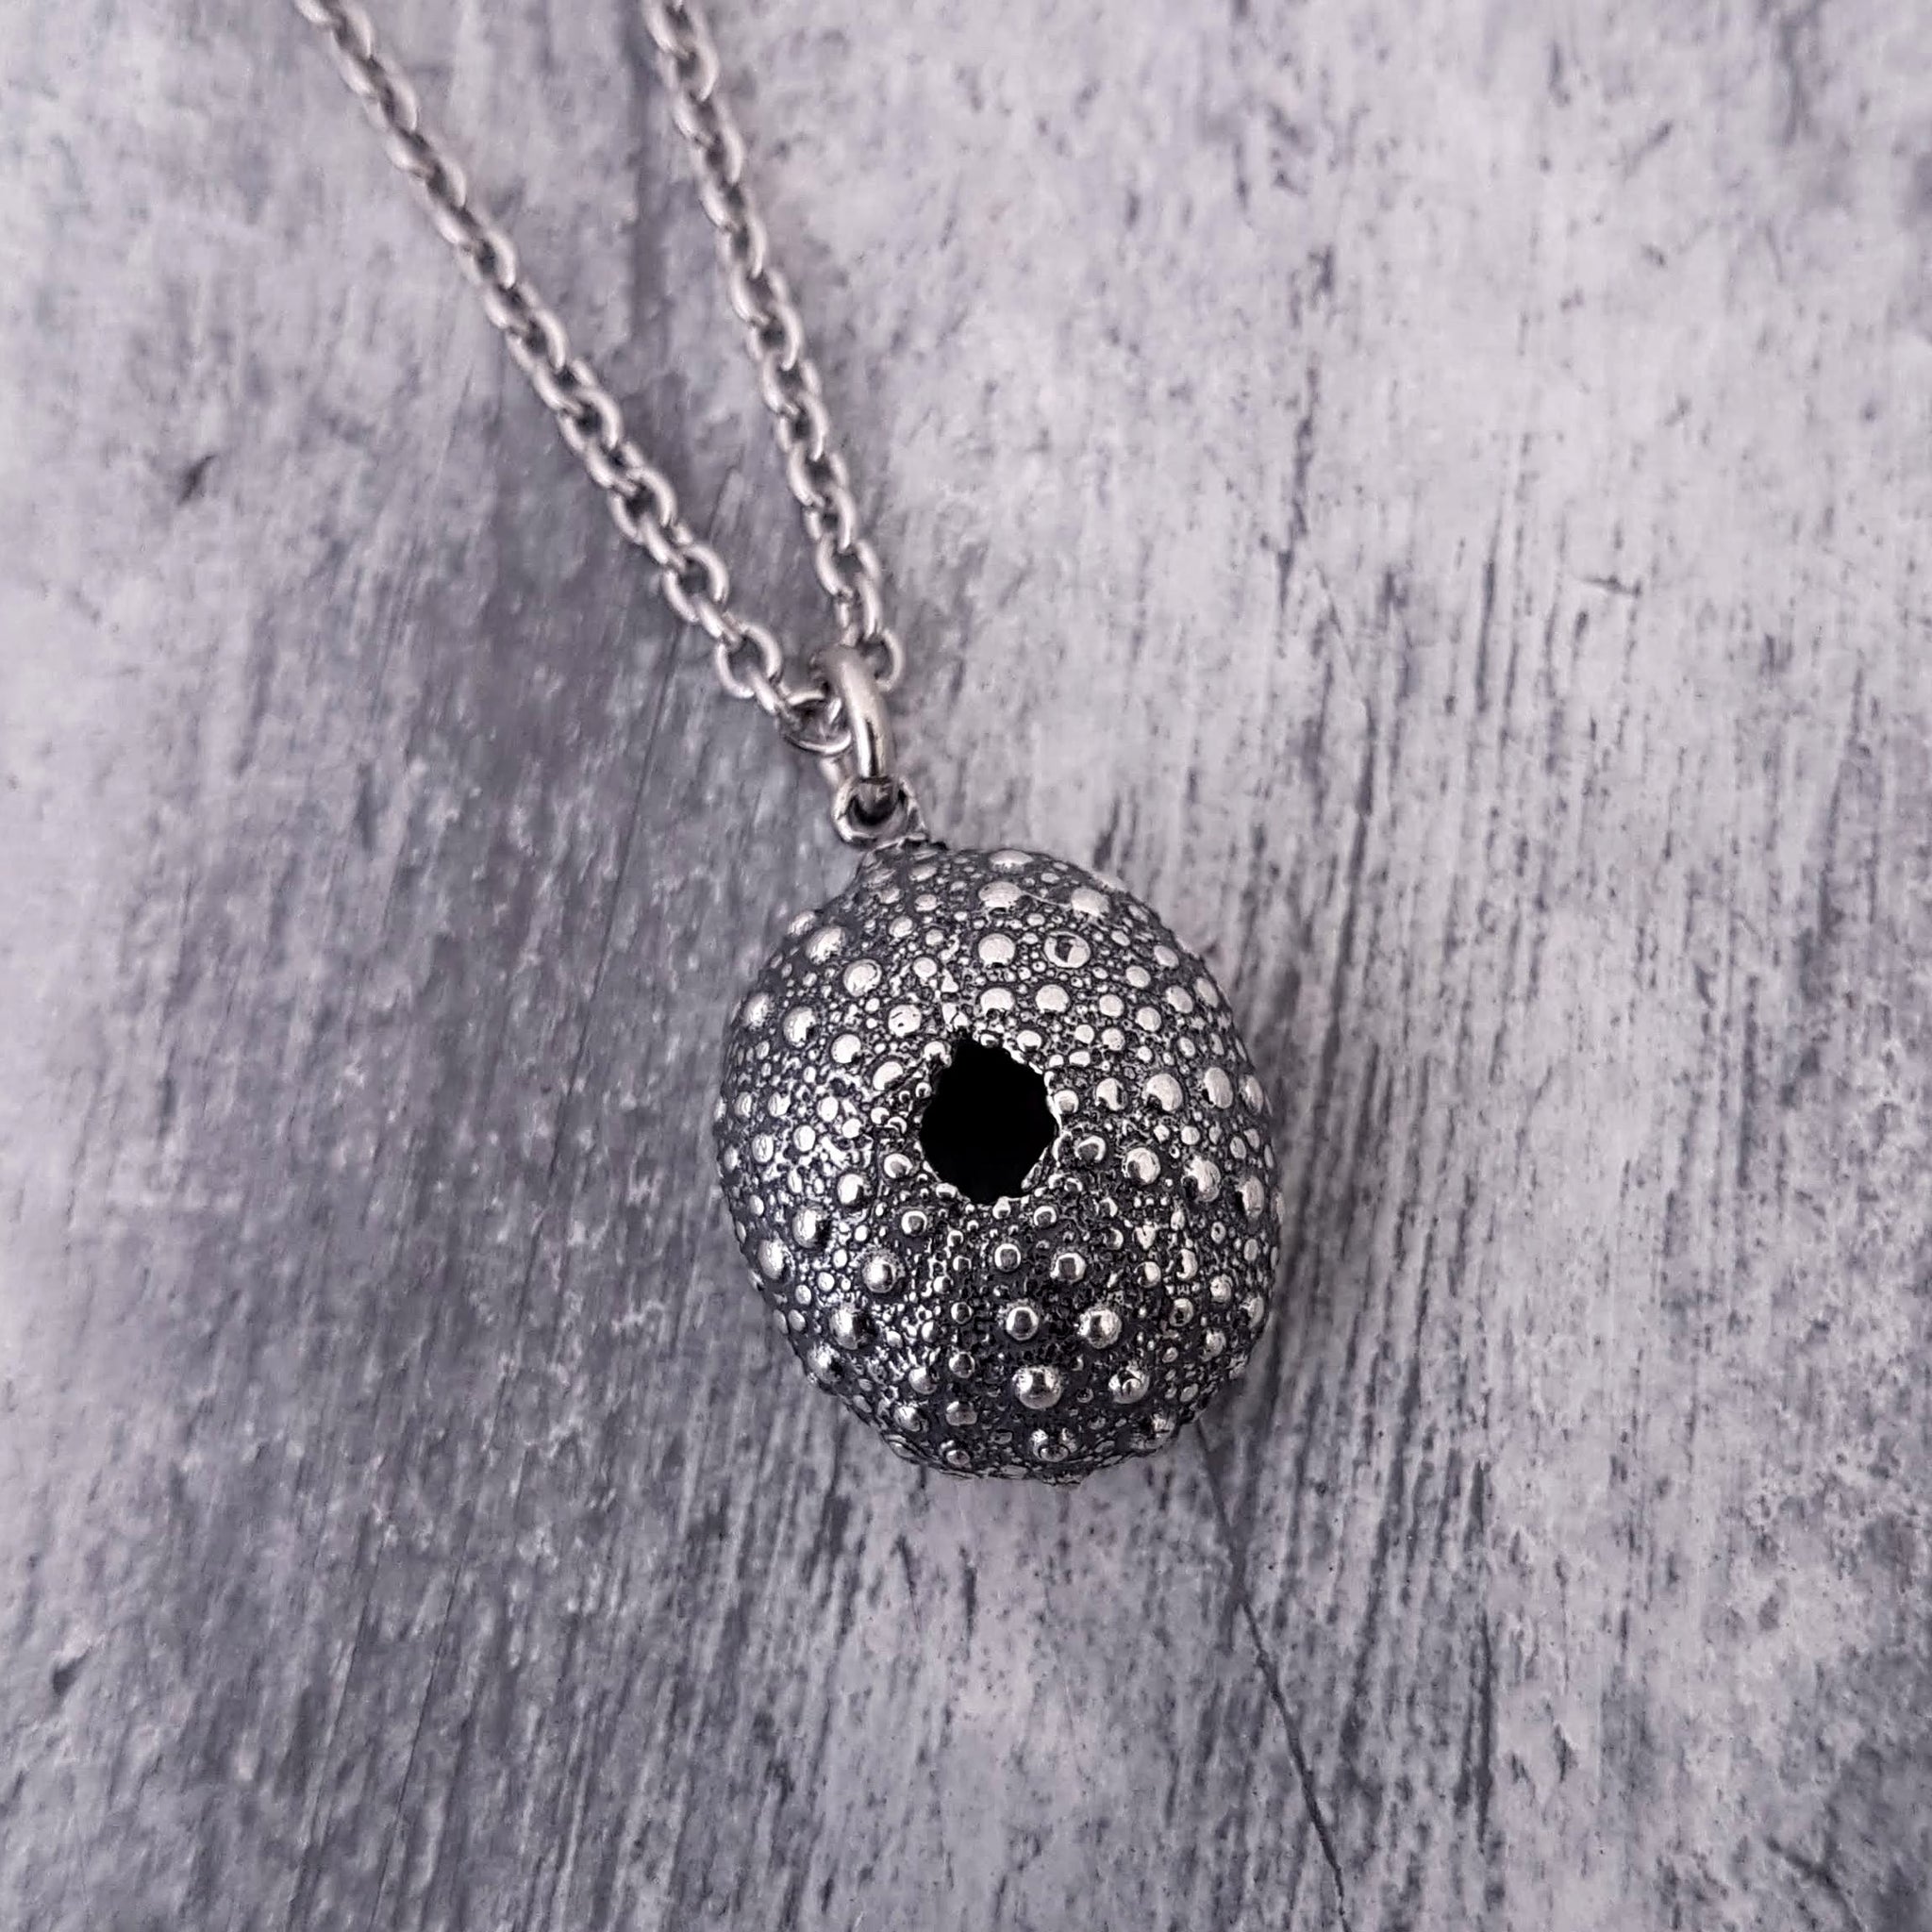 Sea Urchin Necklace - Gwen Delicious Jewelry Designs